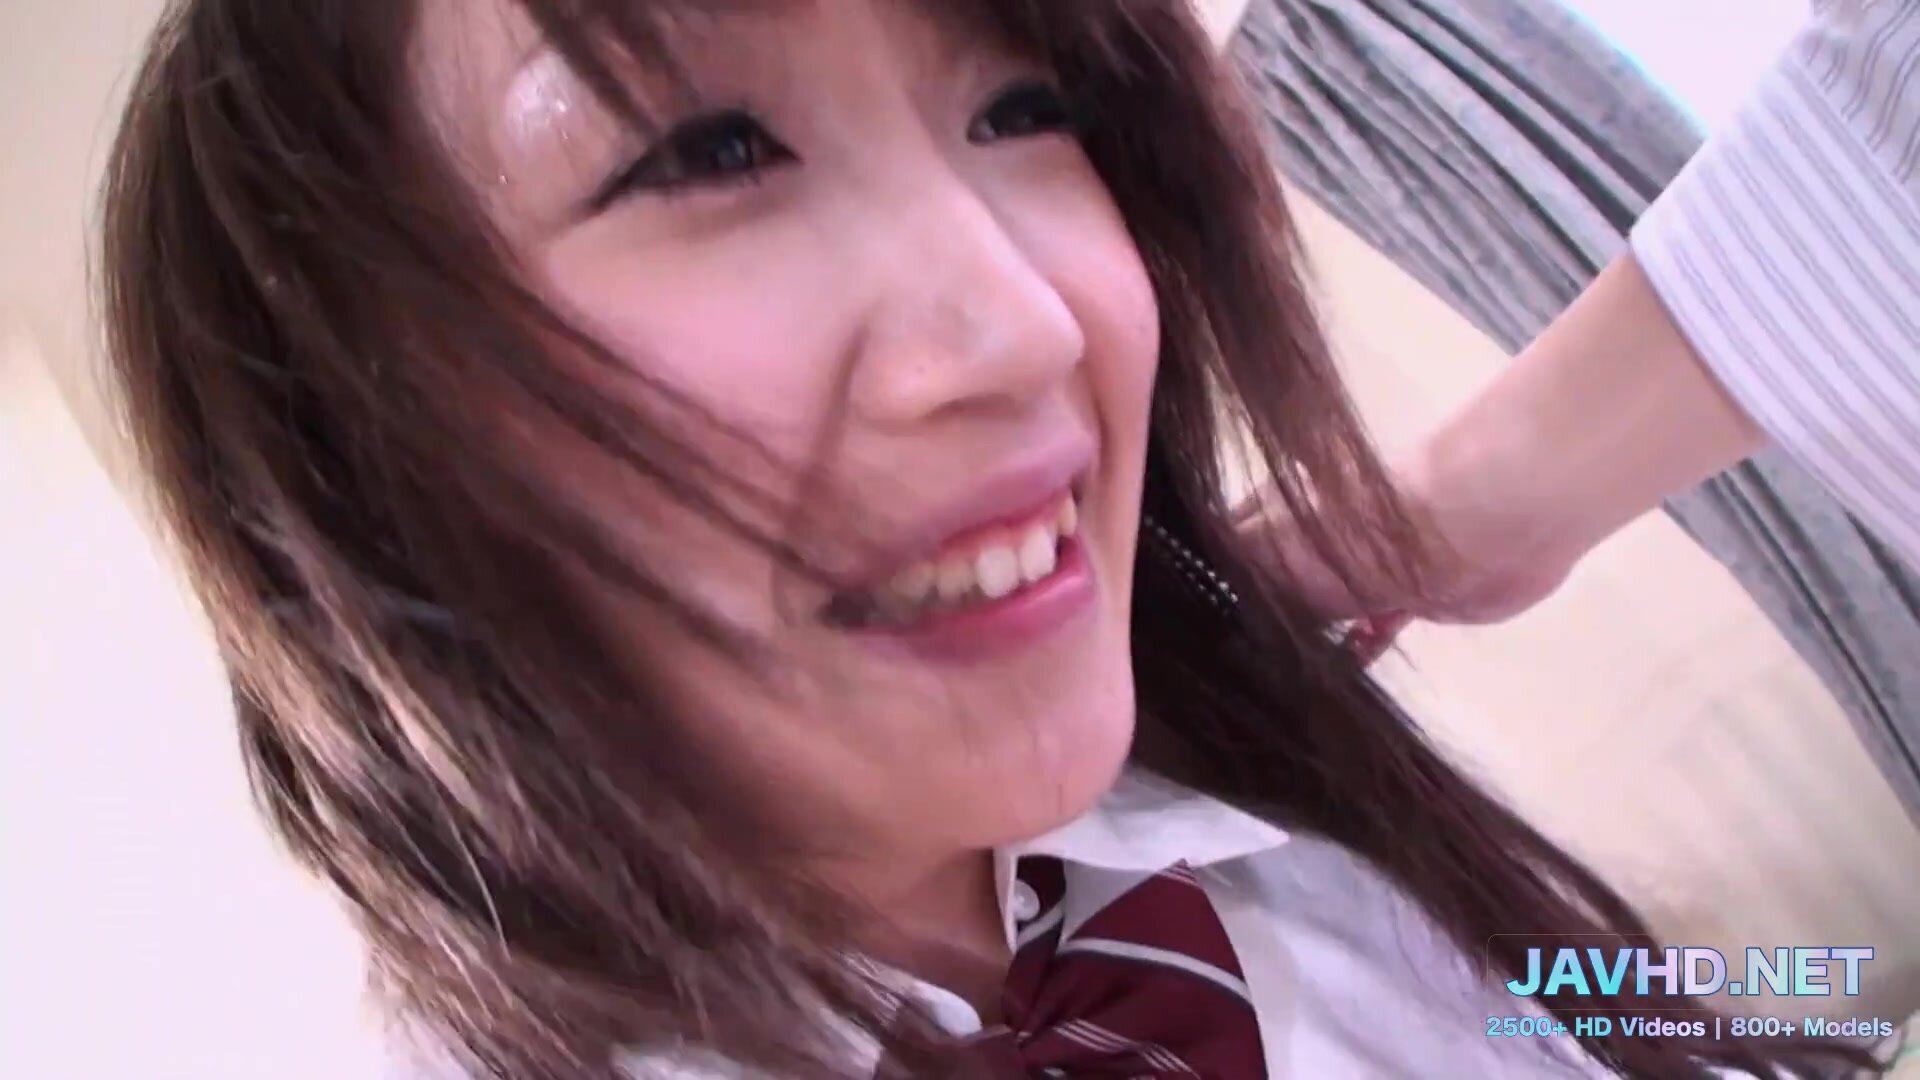 They are so cute Japan schoolgirls Vol 103